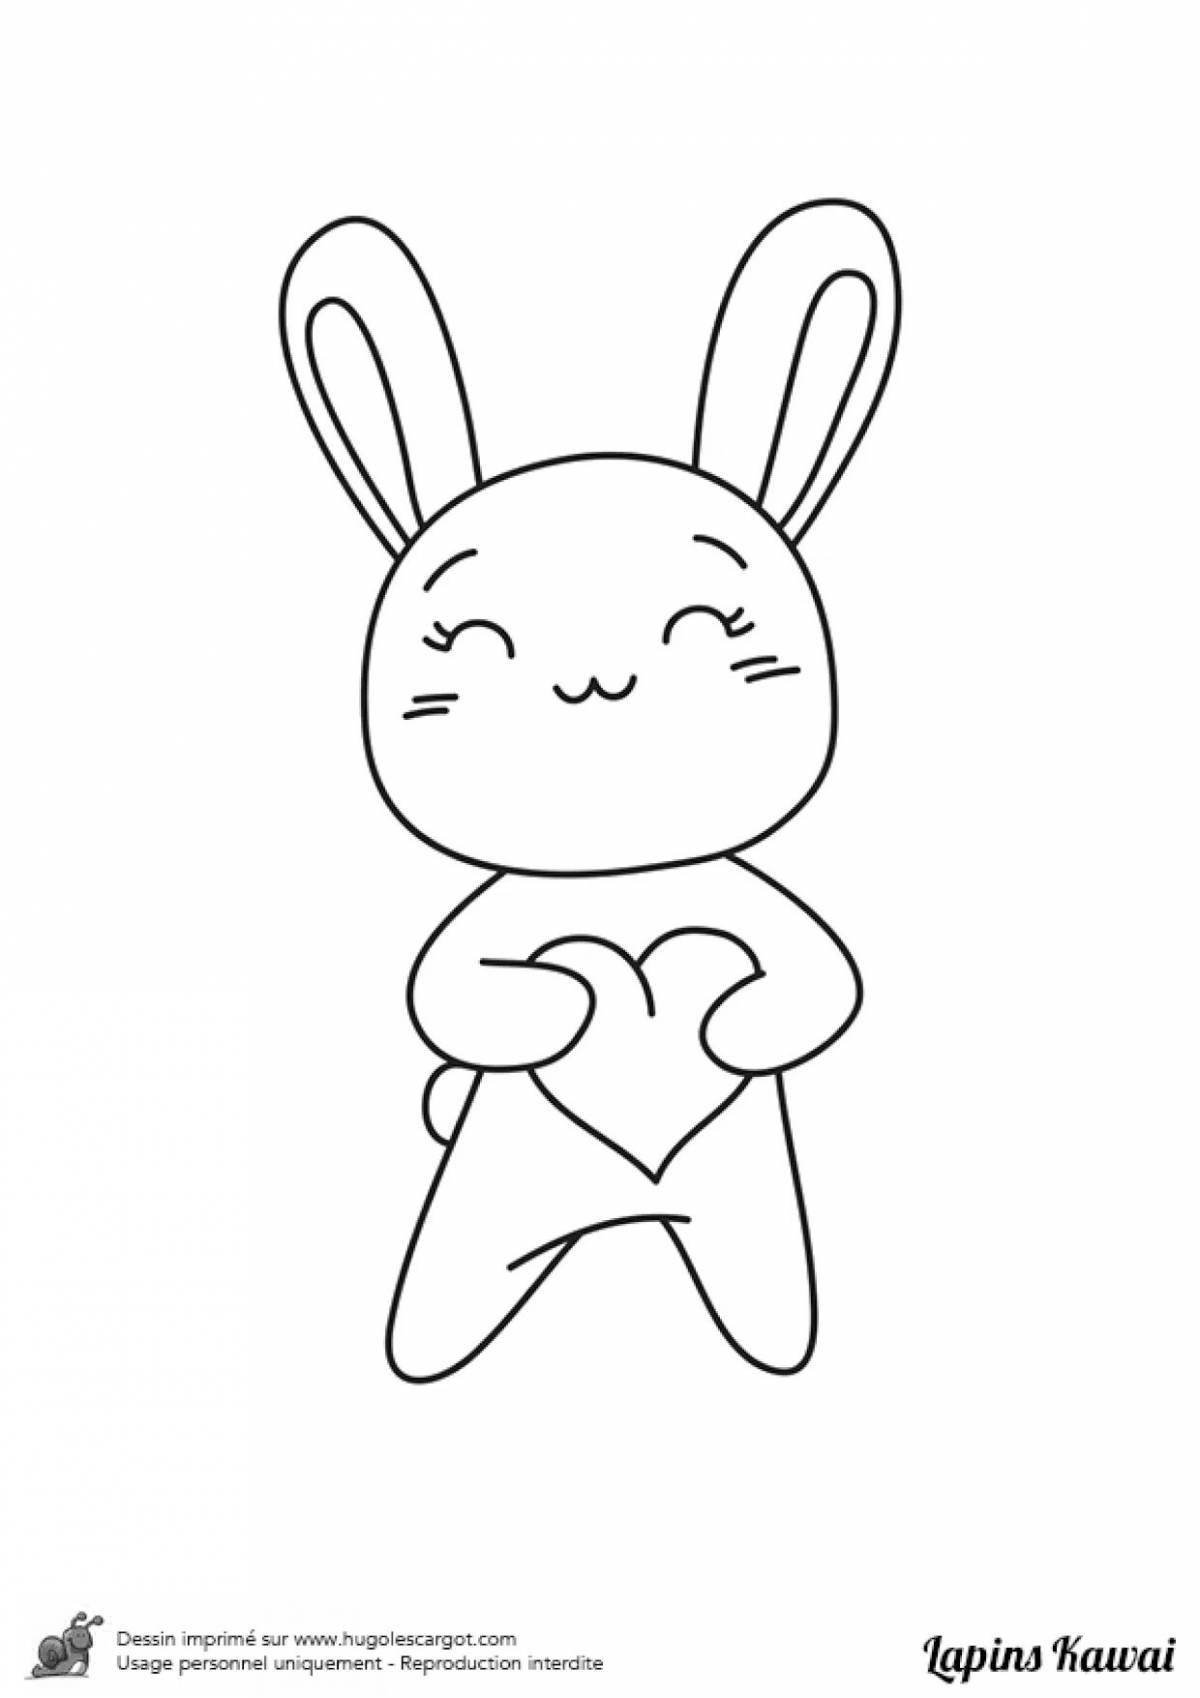 Bunny with a heart #3